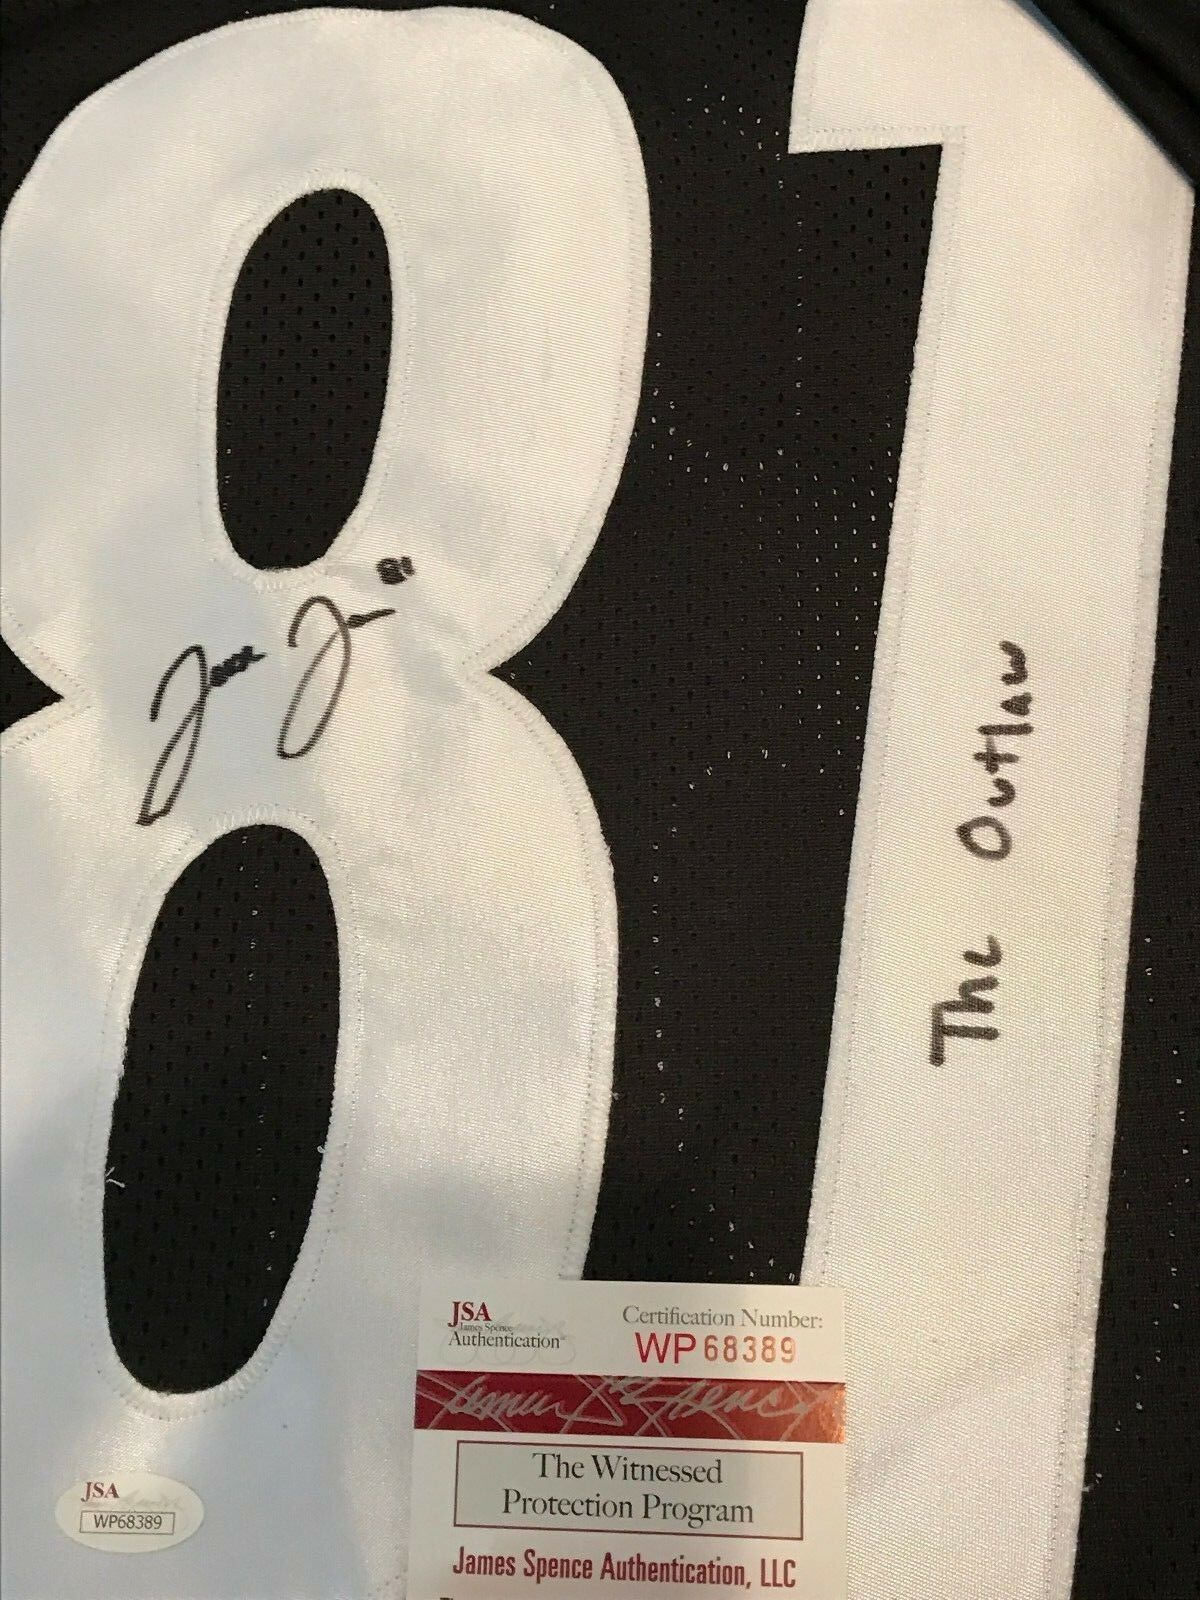 MVP Authentics Jesse James Autographed Signed Inscribed Pittsburgh Steelers Jersey Jsa  Coa 126 sports jersey framing , jersey framing